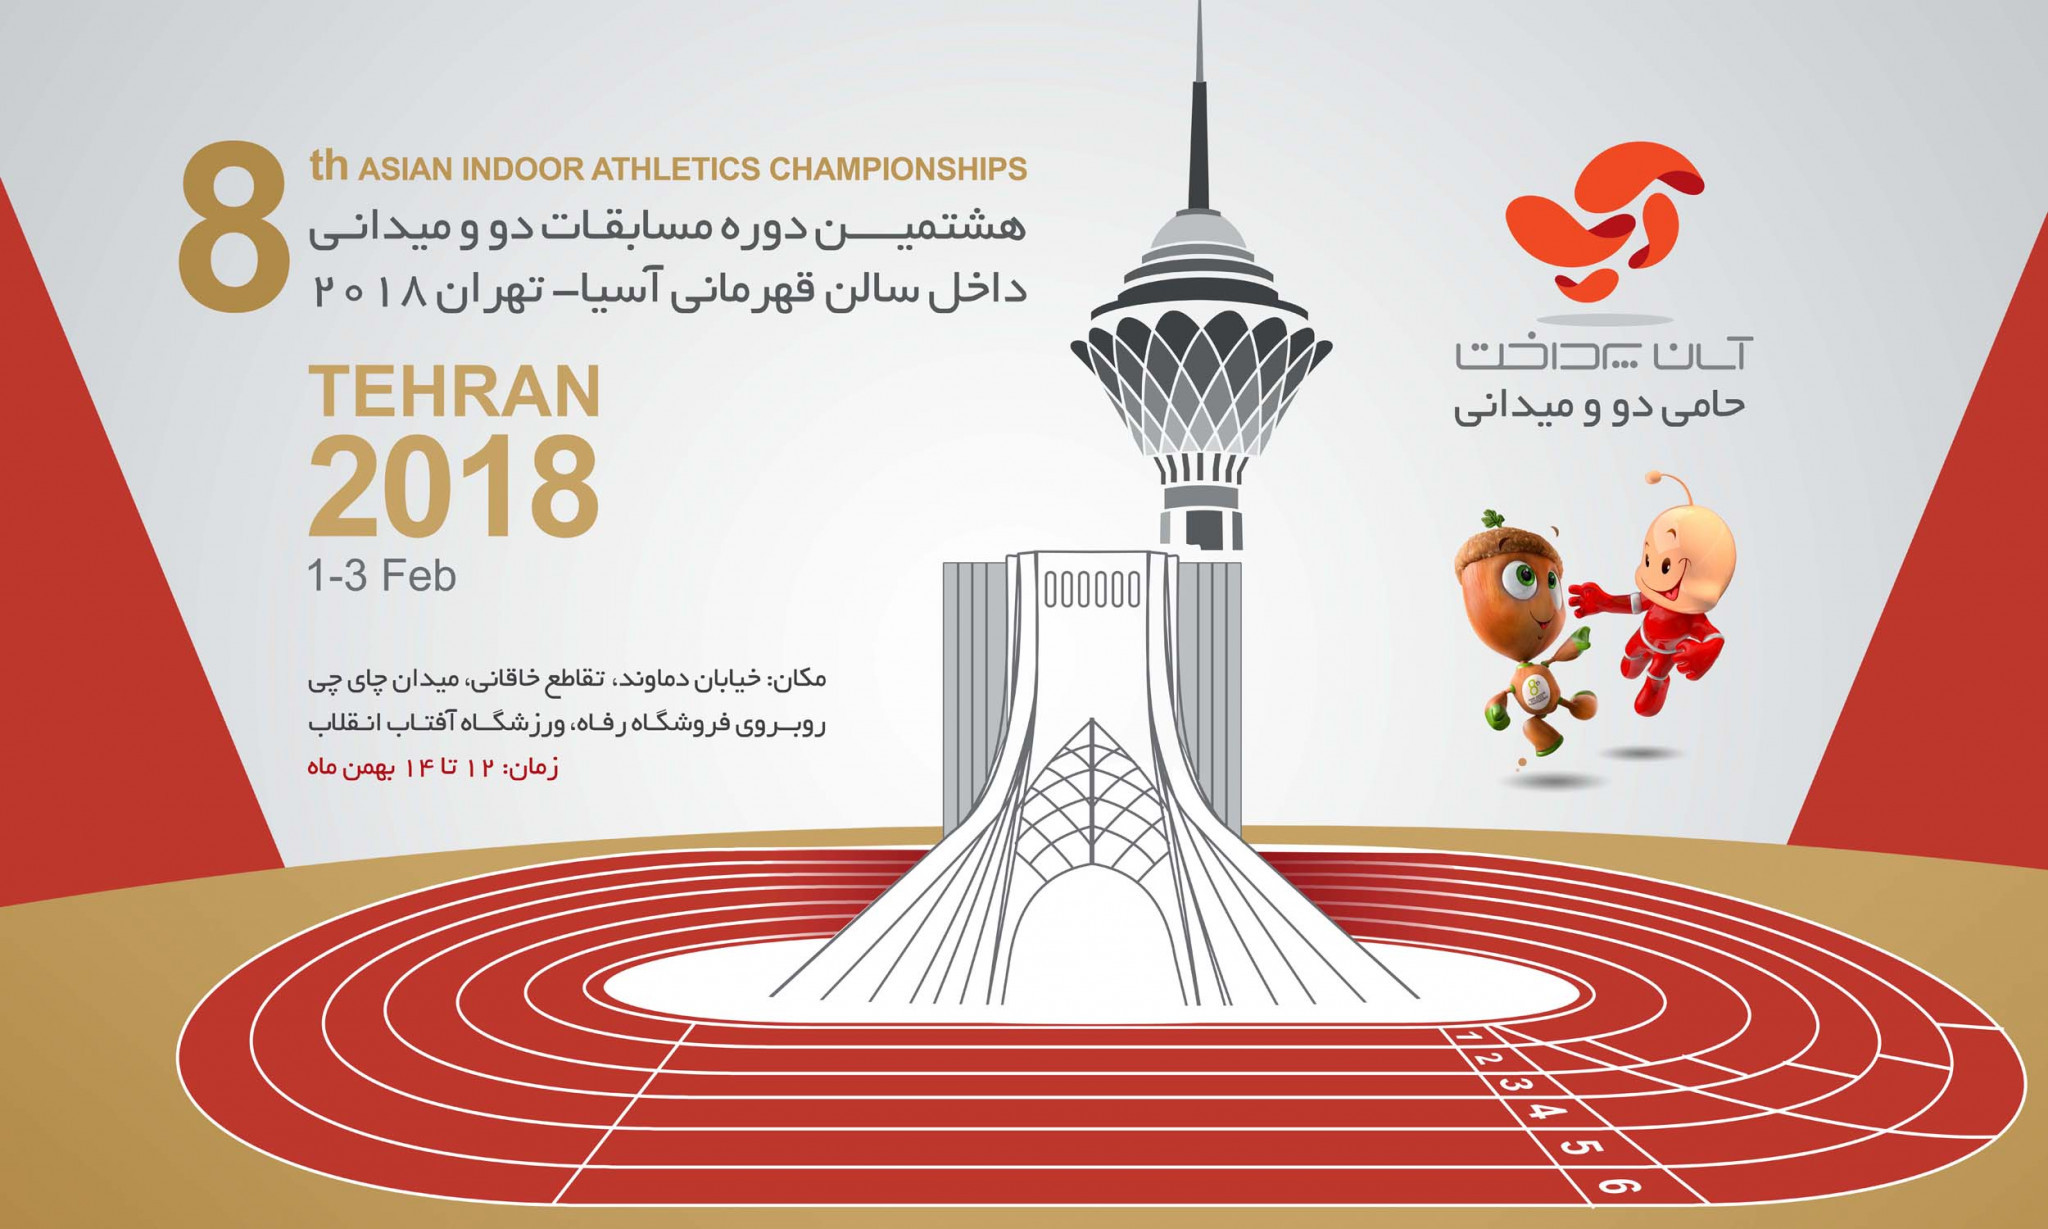 Barshim the star name as Tehran hosts Asian Indoor Athletics Championships